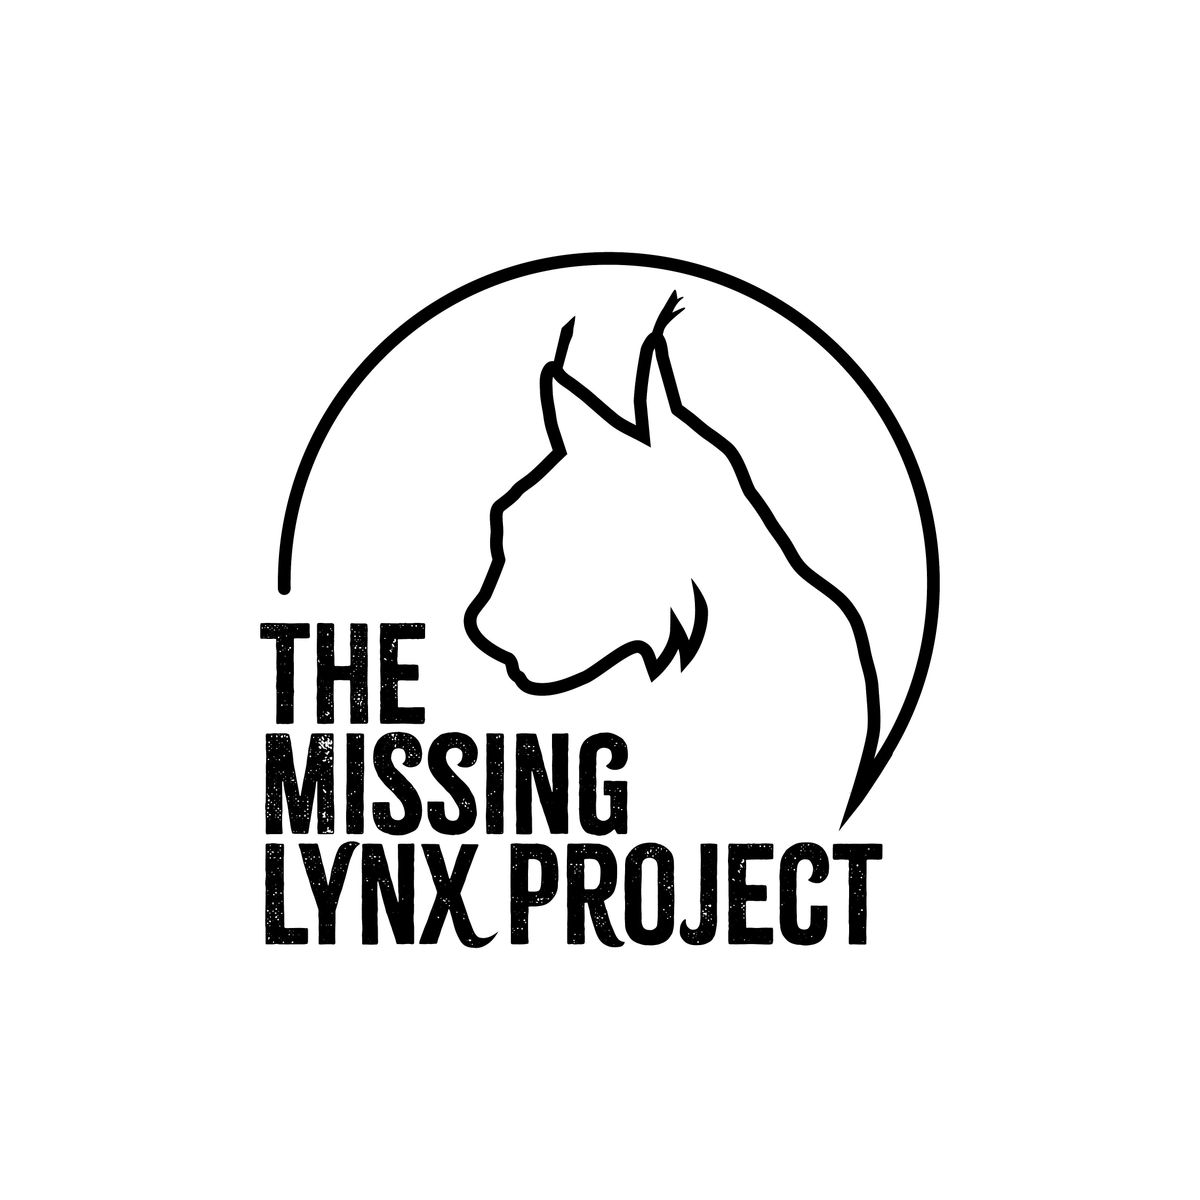 The Missing Lynx Project - STAPLETON community workshop 14:00-16:00